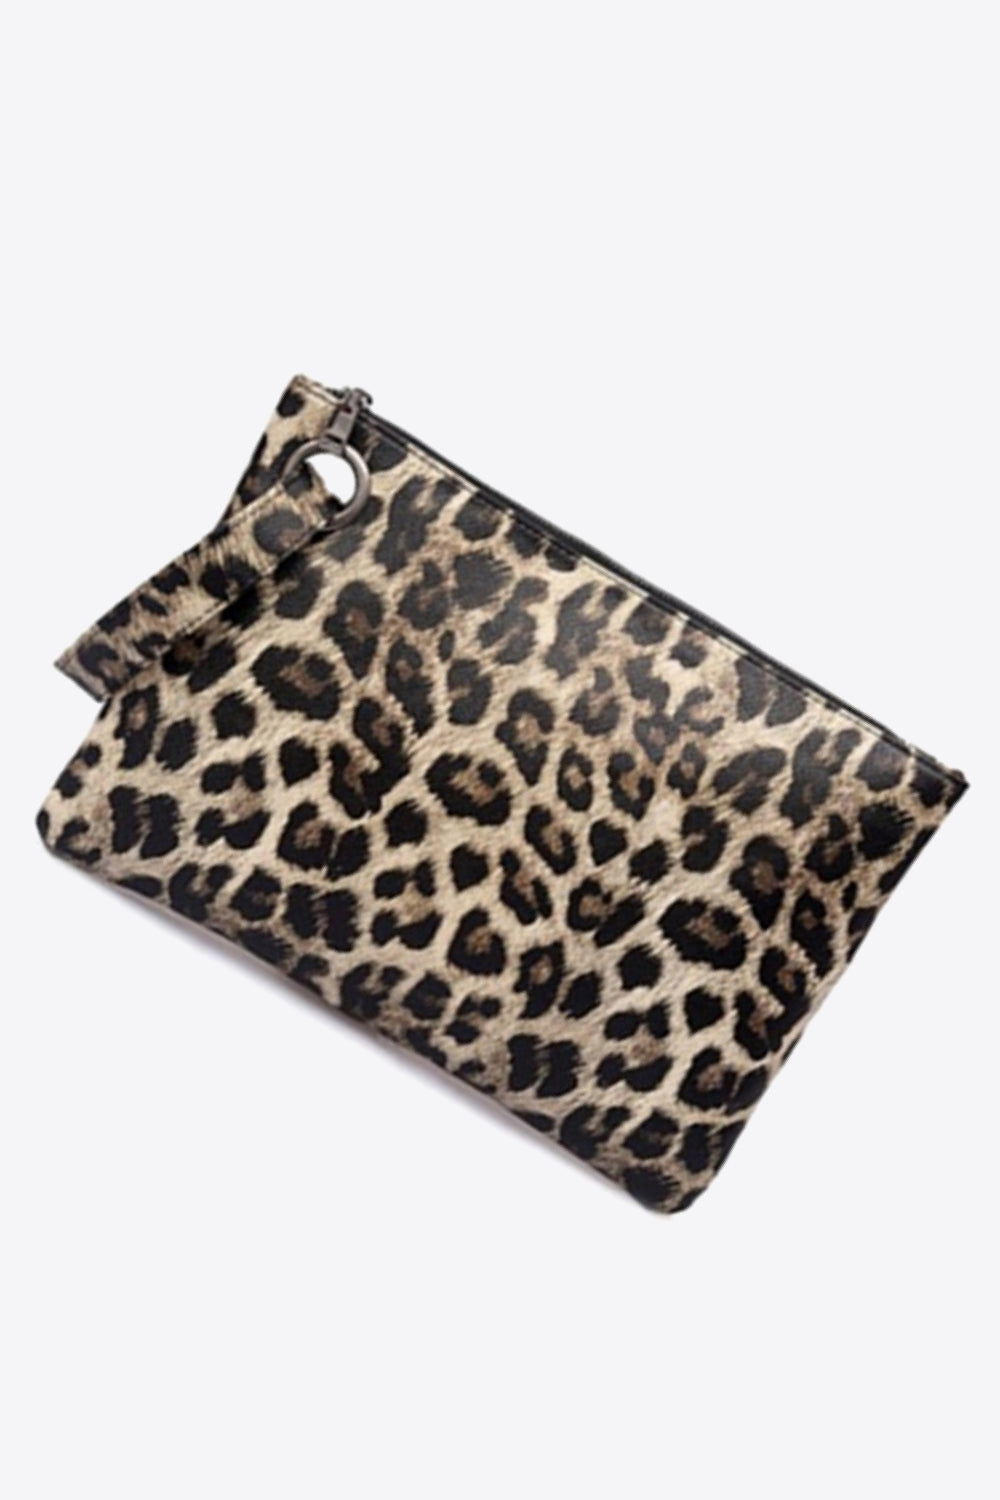 Leopard PU Leather Clutch - nailedmoms